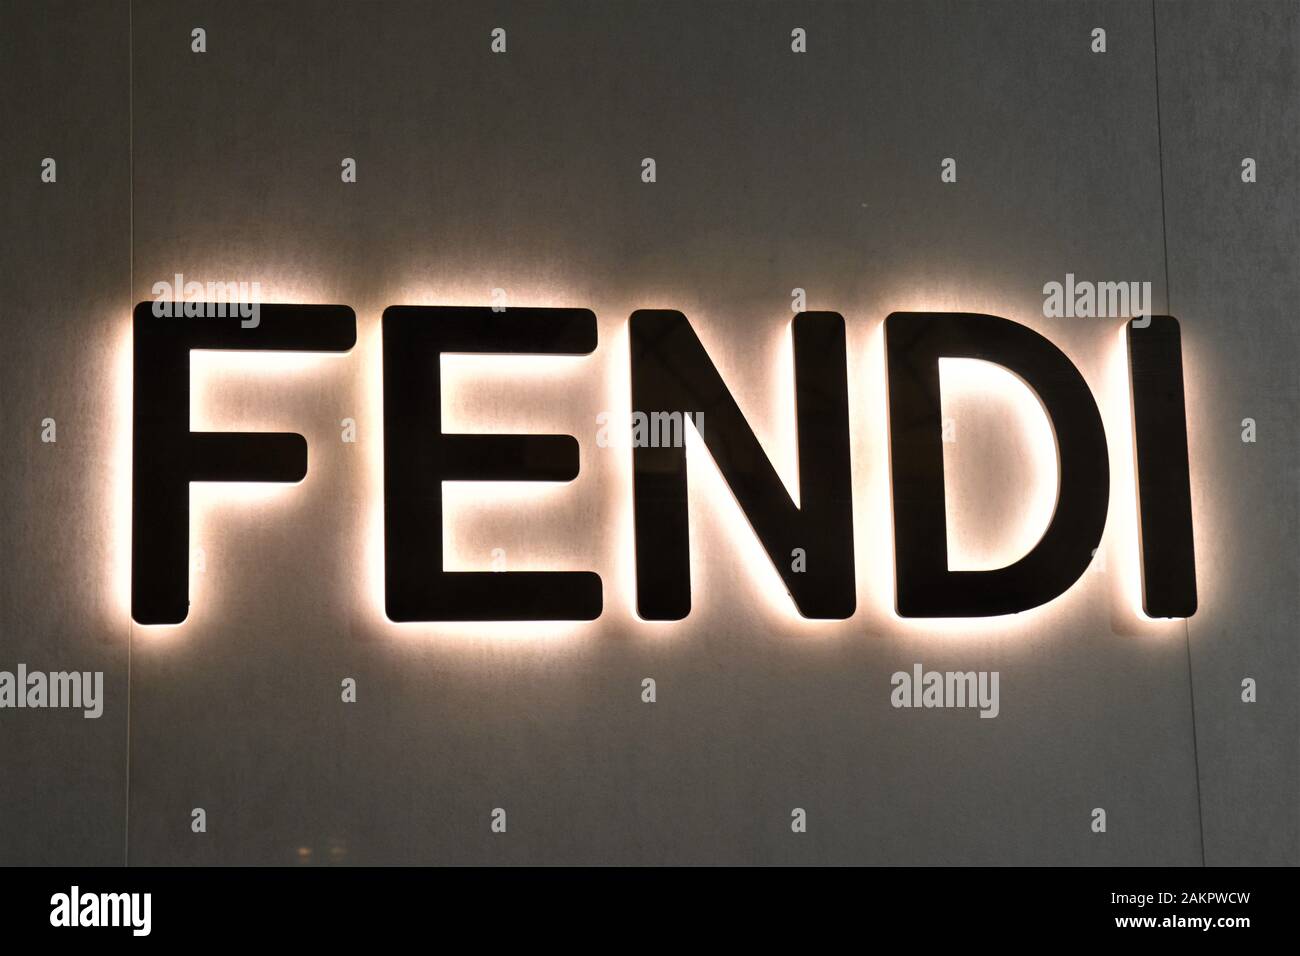 FENDI LOGO ON THE WALL IN THE NIGHT Stock Photo - Alamy